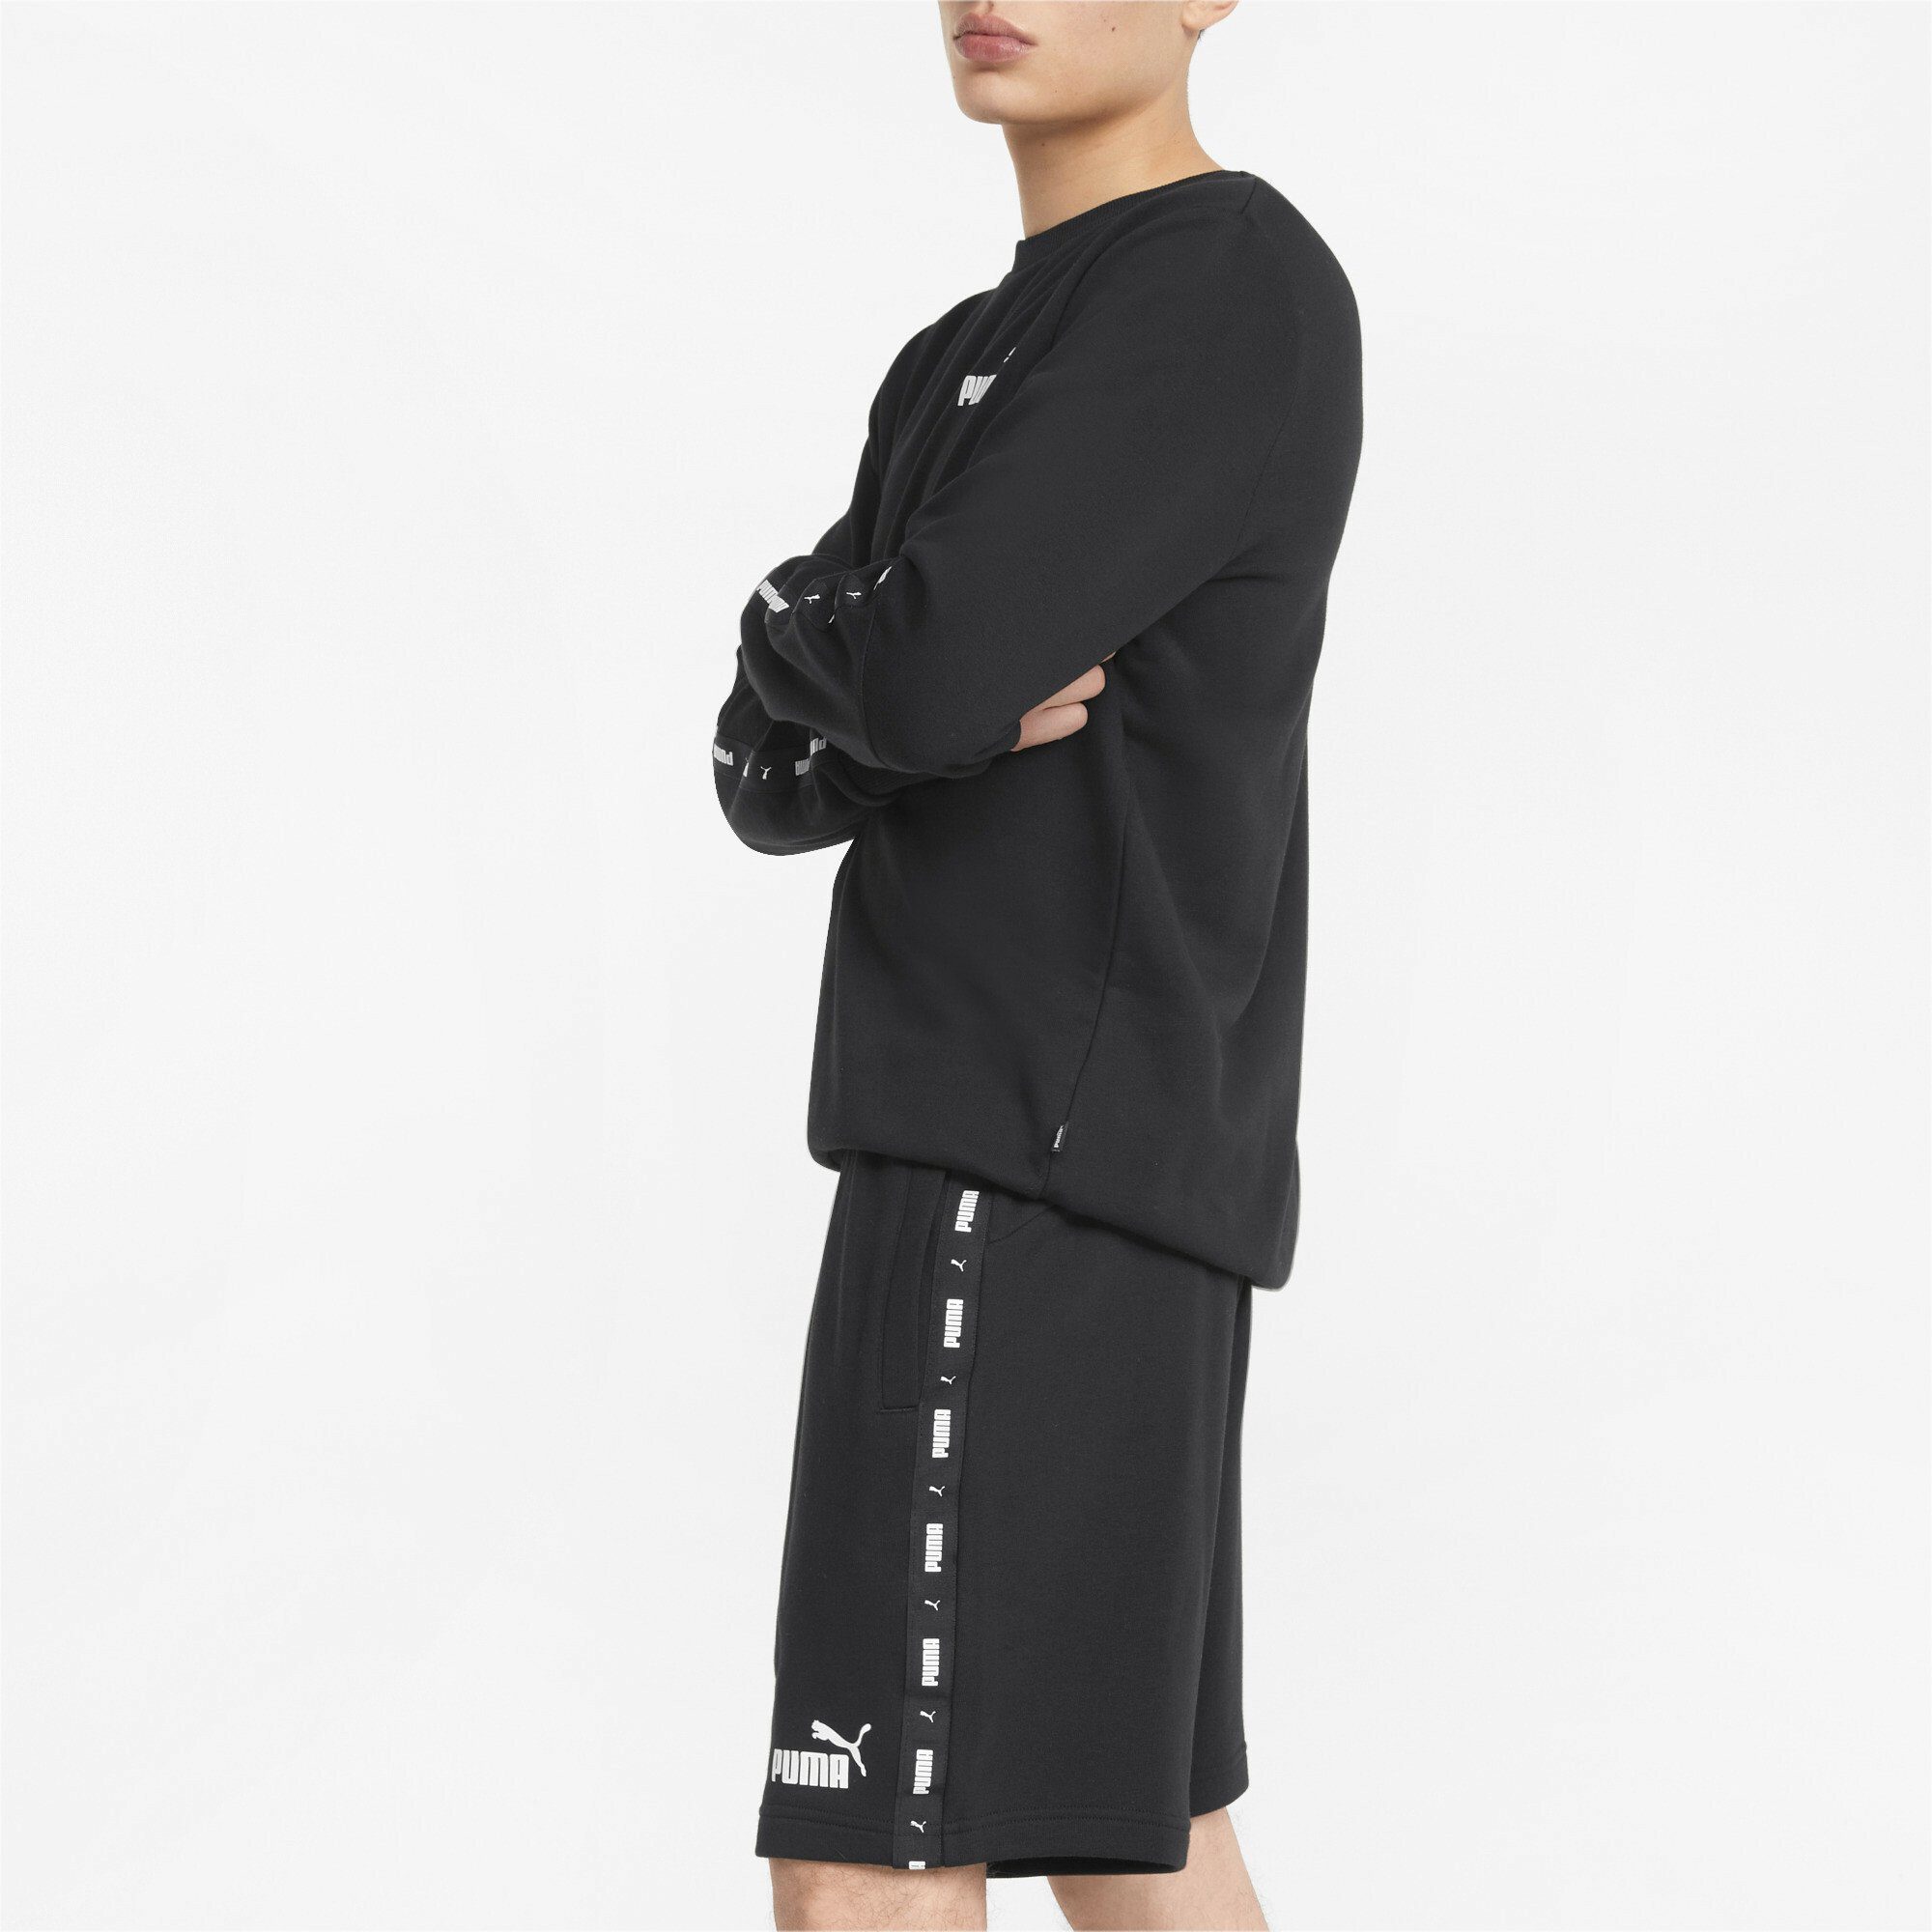 Black PUMA Sporthose Herren Essentials+ Shorts